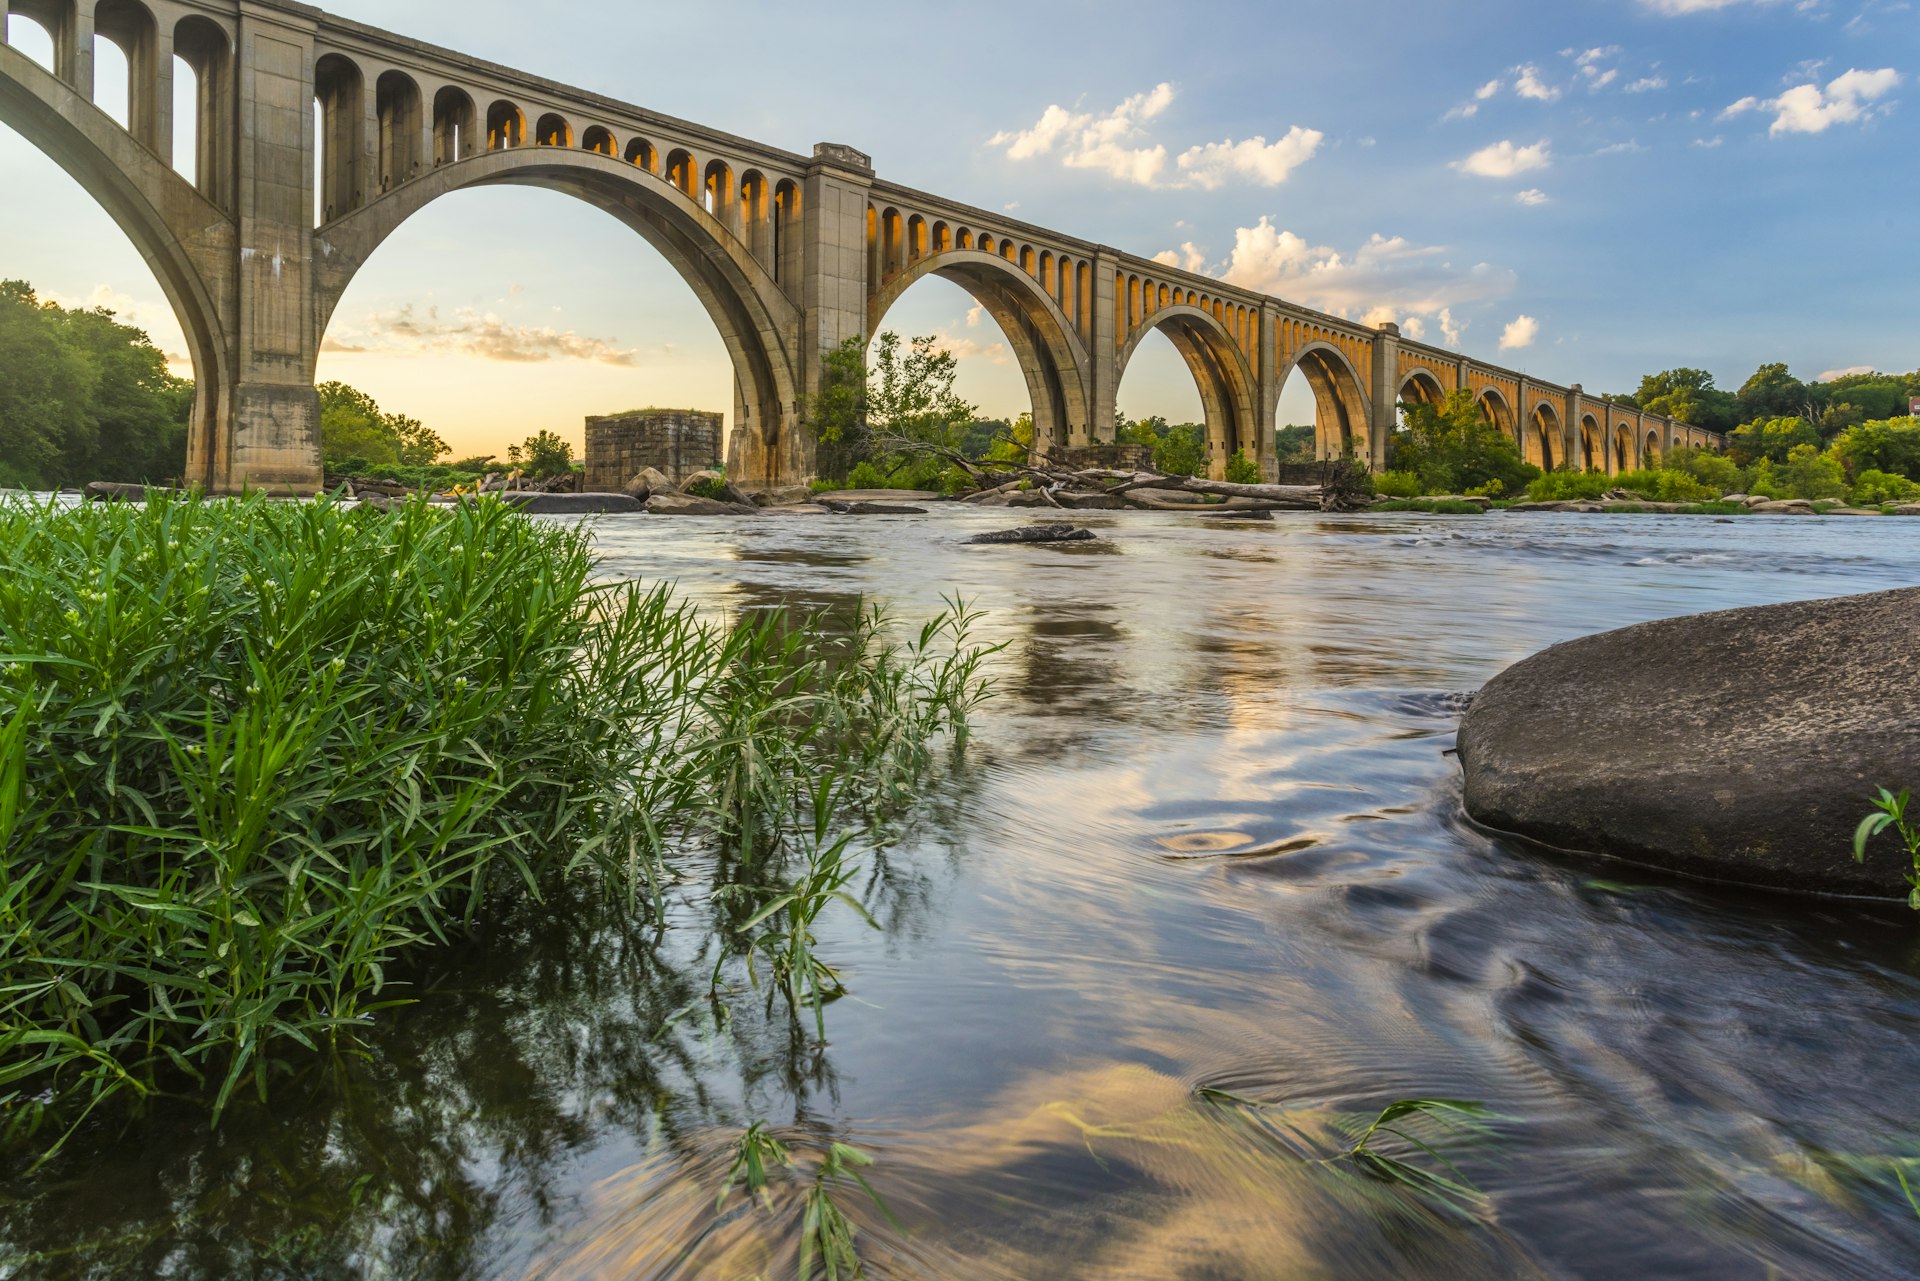 A concrete arch railroad bridge spanning the James River in Richmond, Virginia